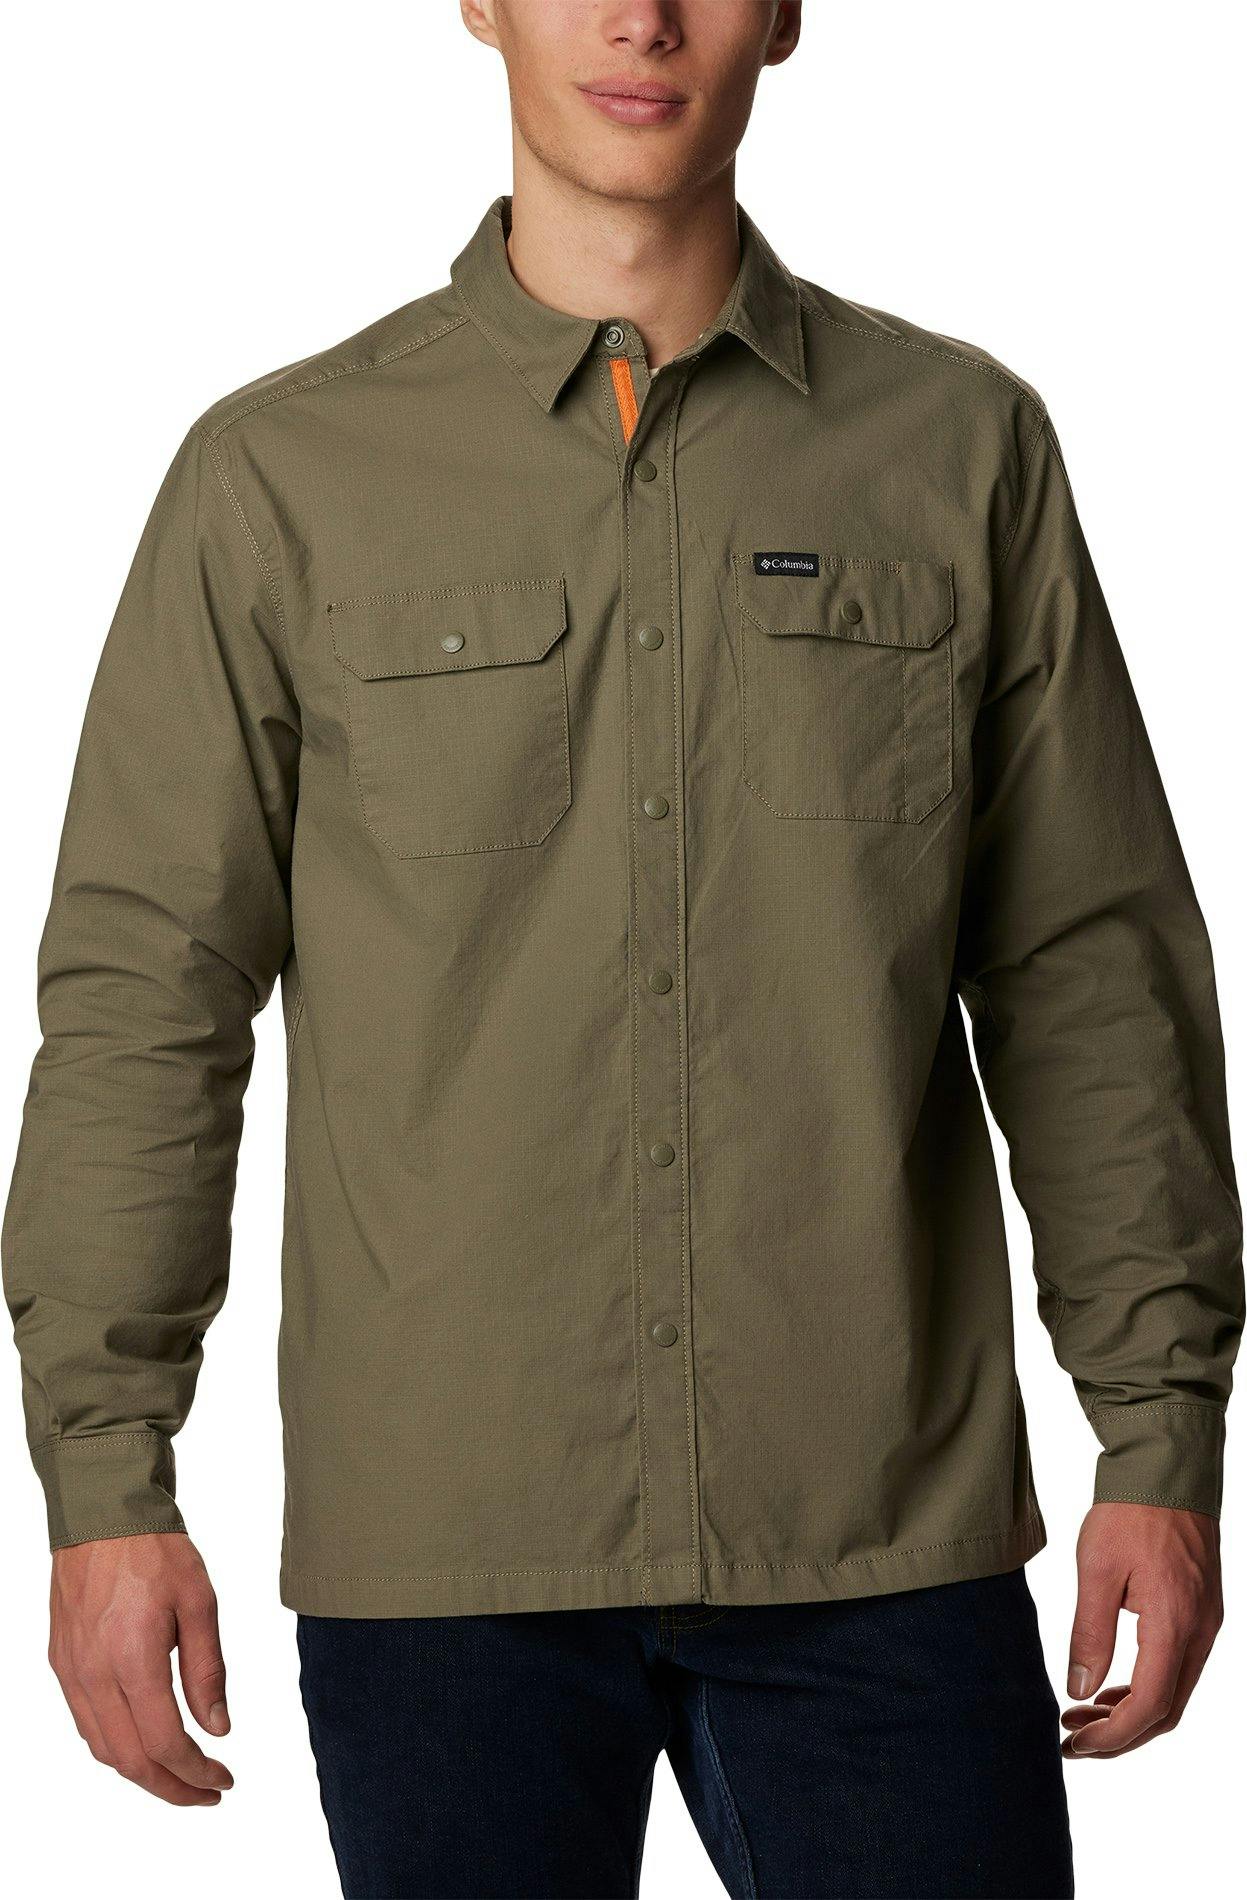 Product image for Landroamer Lined Shirt - Men's